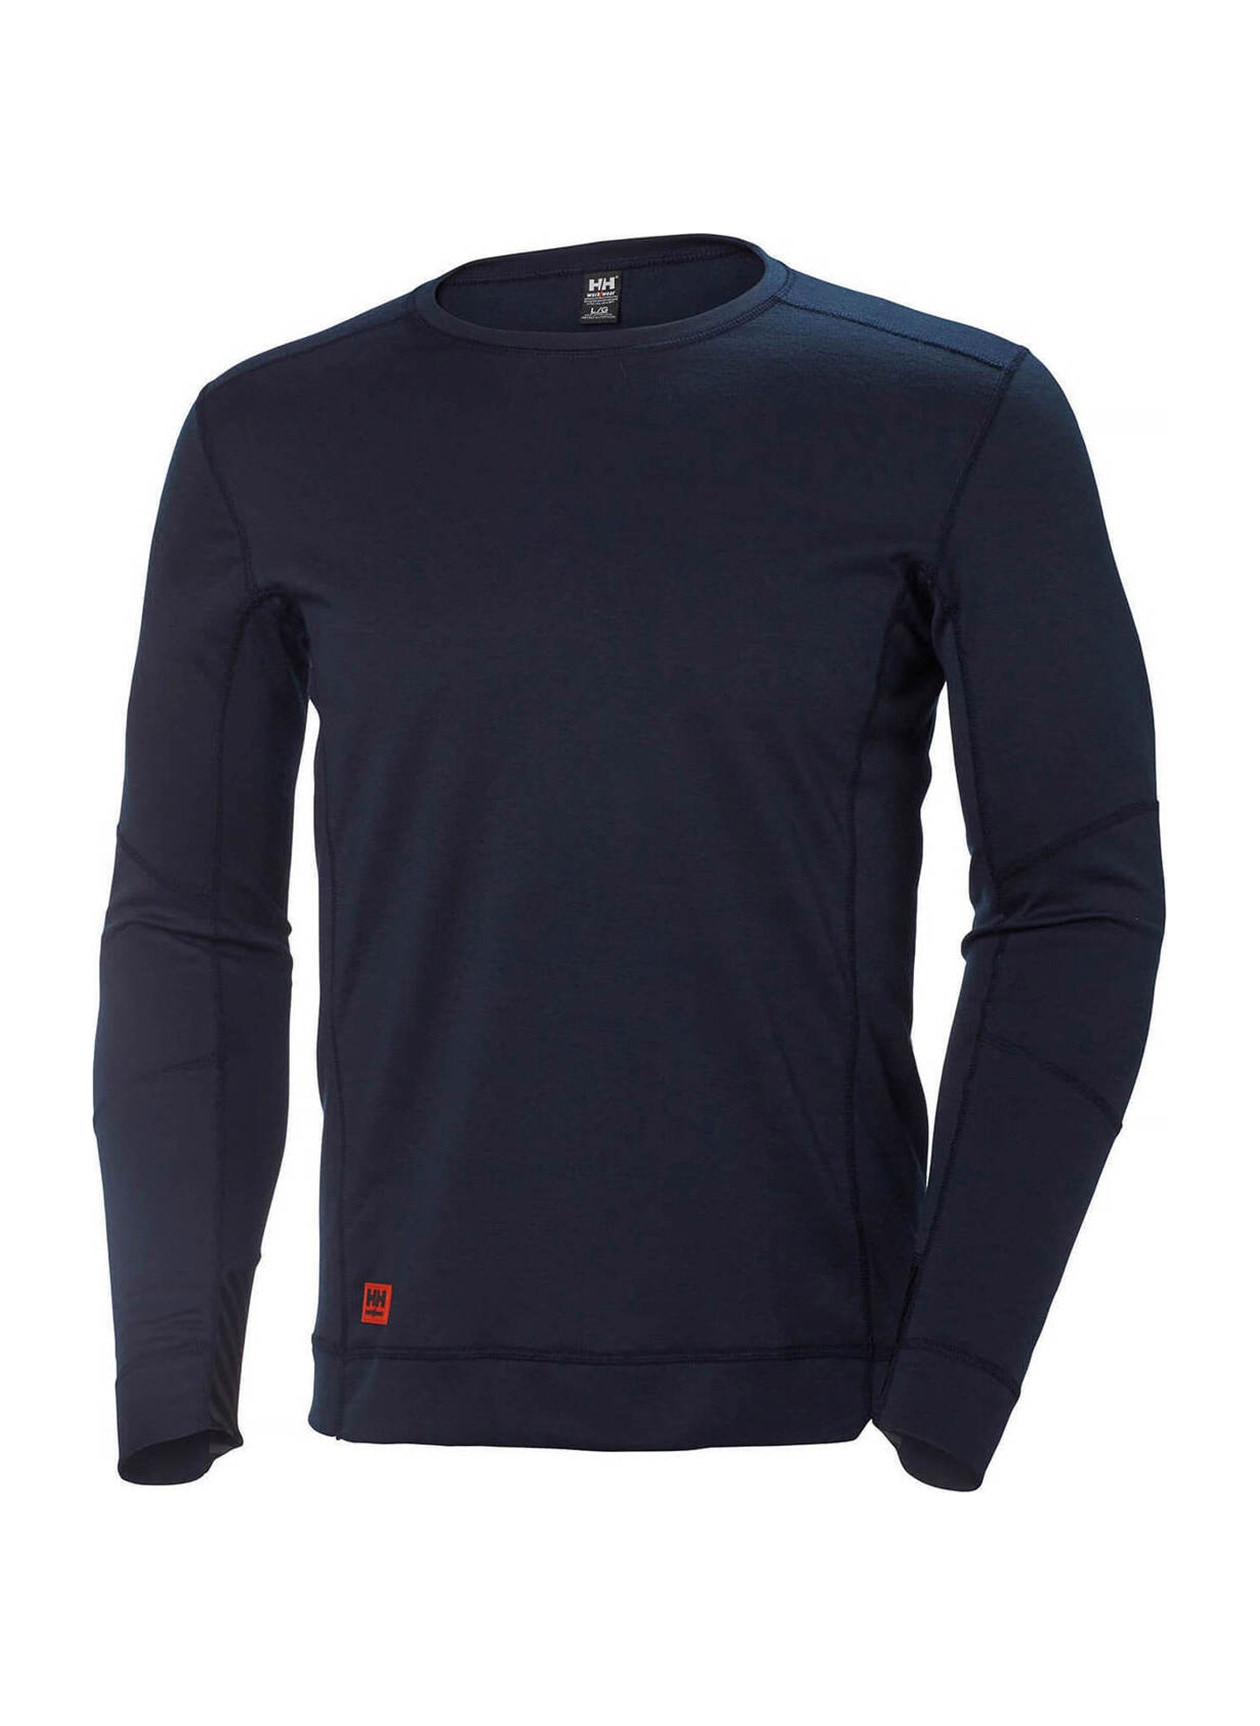 Branded Helly Hansen Men's Navy Lifa Max Base Layer Crewneck Sweatshirt